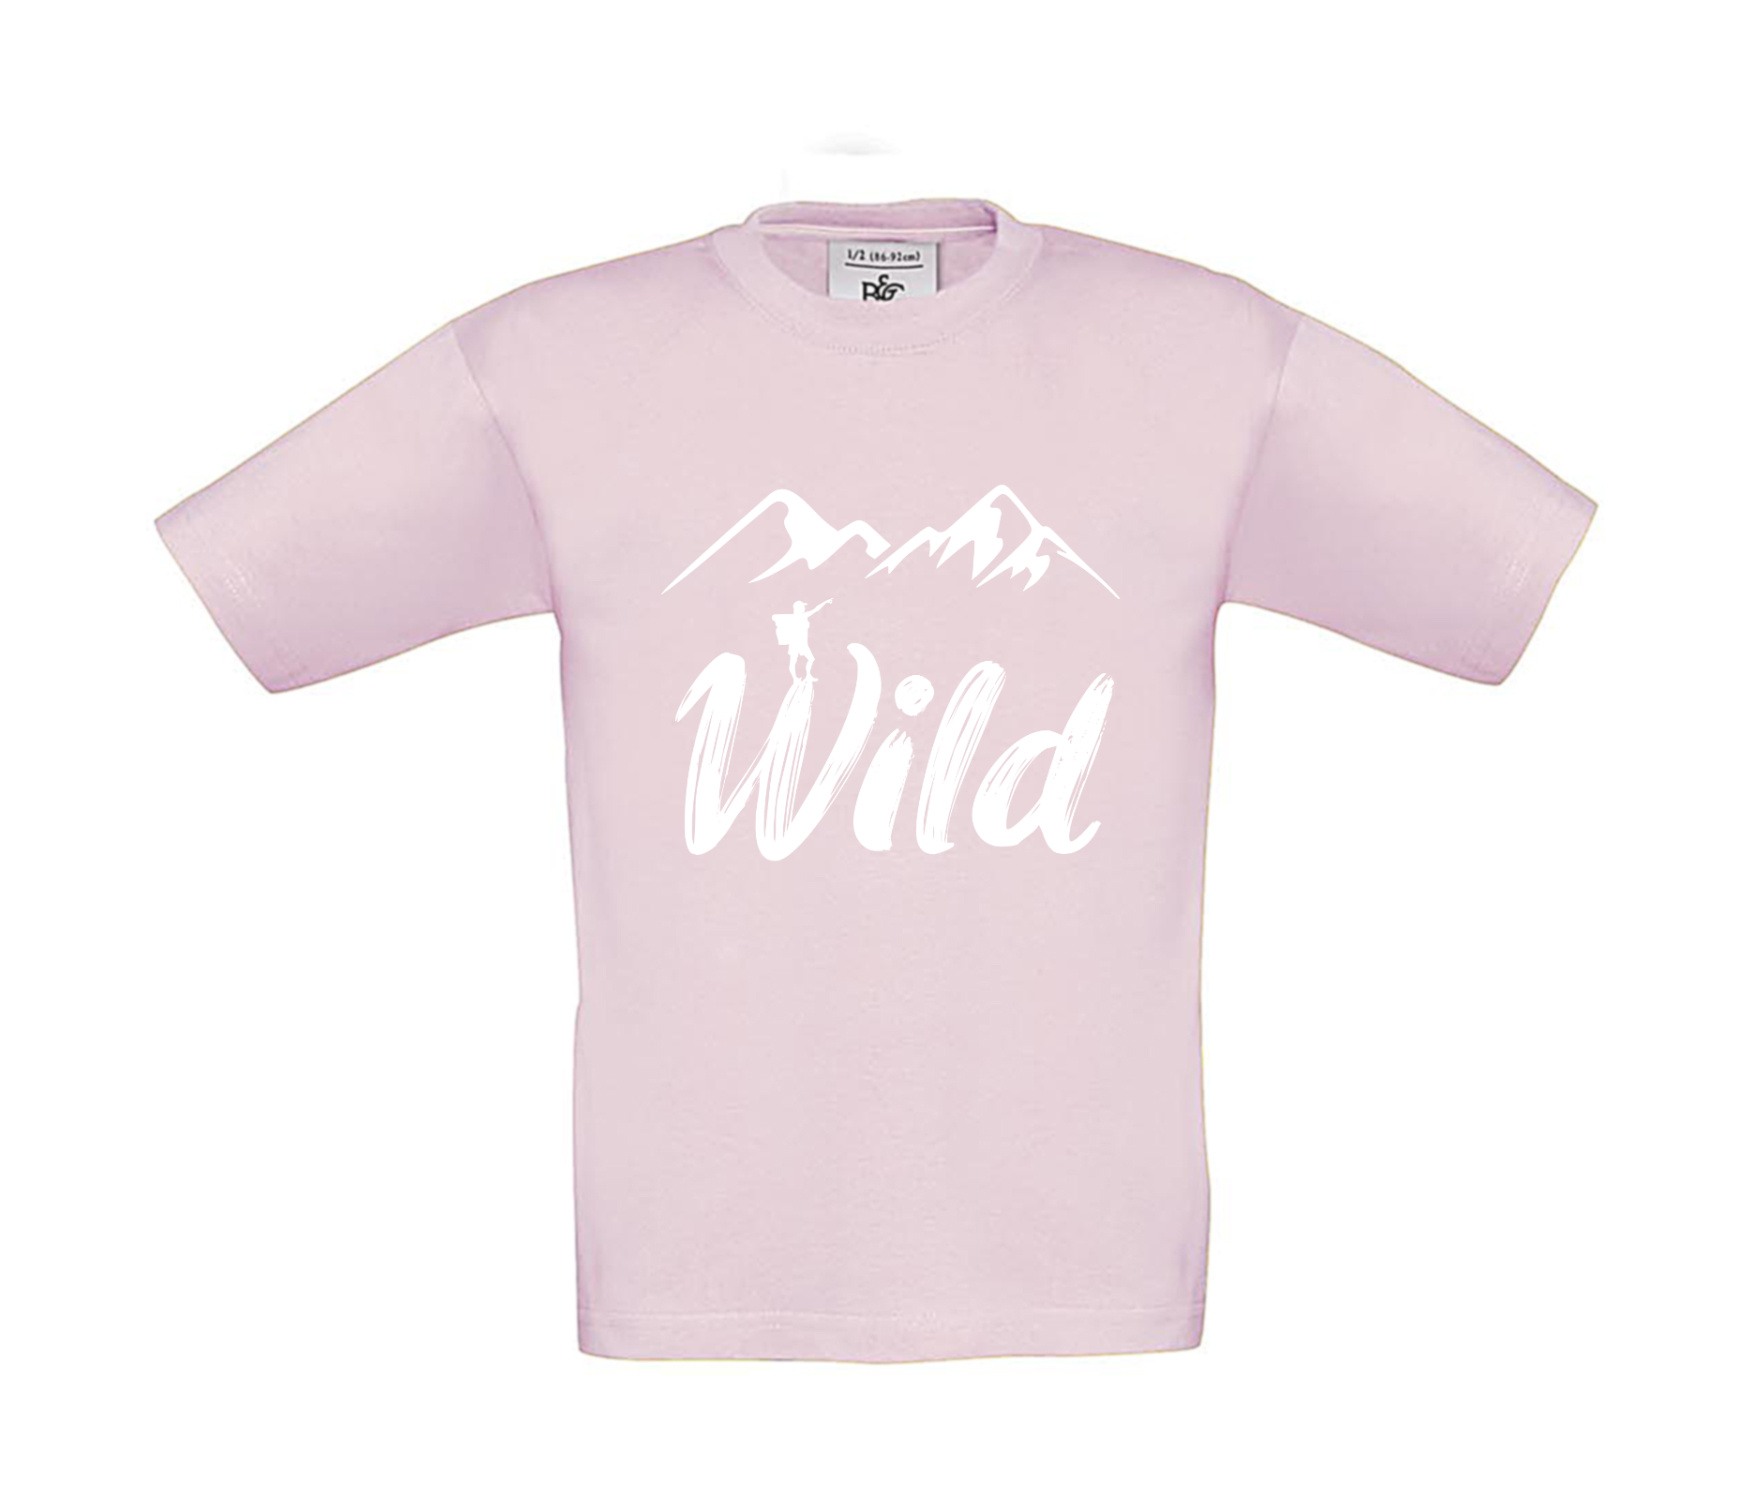 T-Shirt Kinder Outdoor - Wild